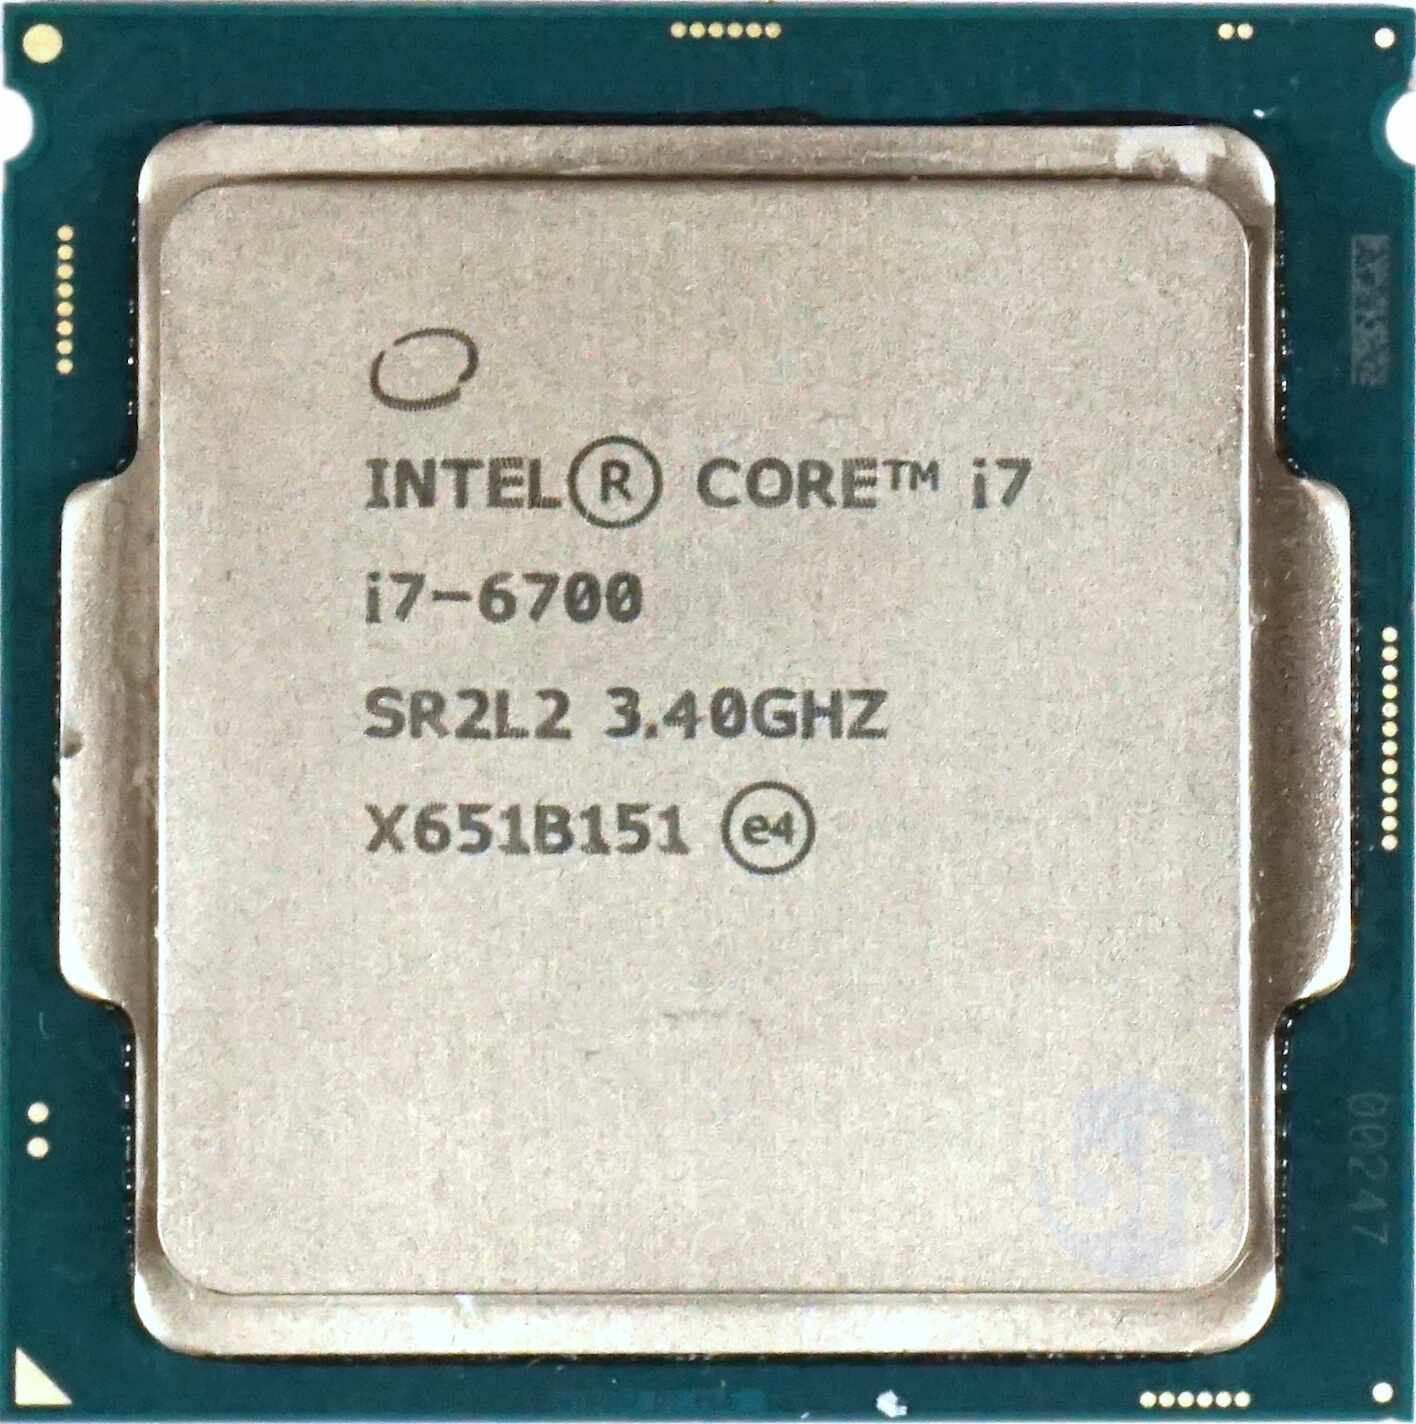 Procesor Intel Core i7-6700 3.40GHz, 8MB Cache, Socket 1151 v1